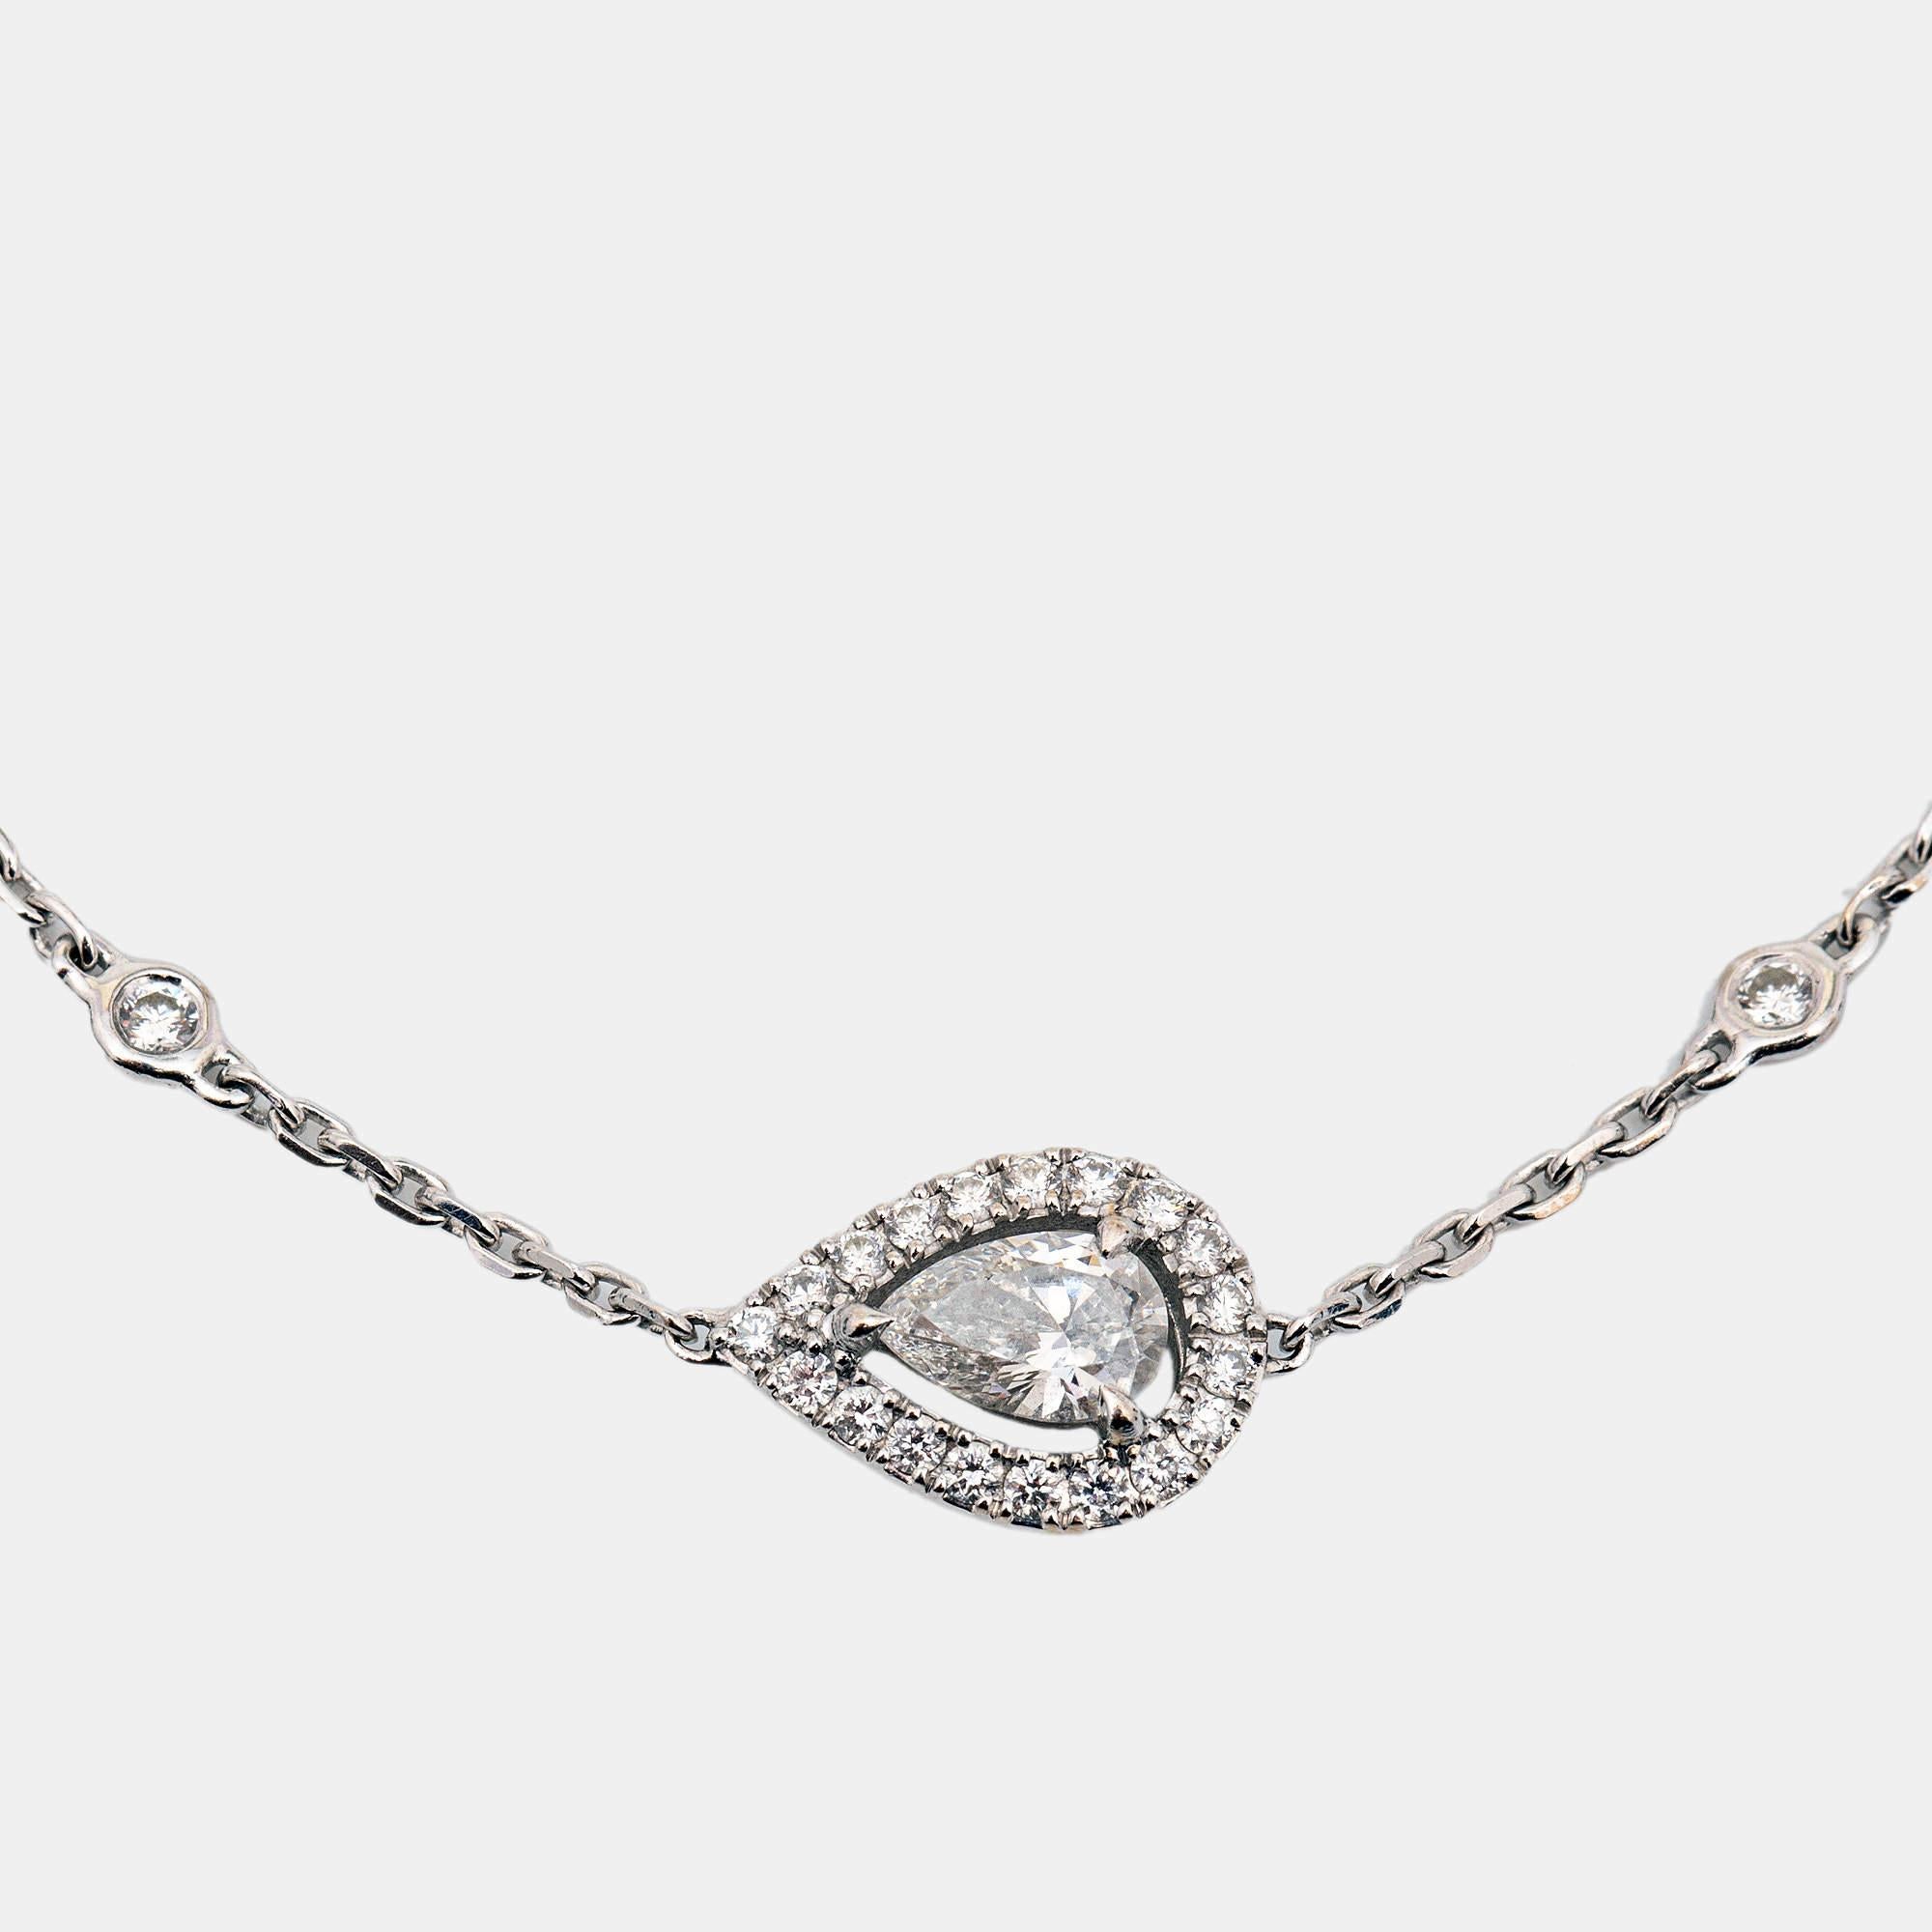 The Messika Joy Diamant Poire bracelet brings forward a pear-cut diamond encircled with little microset diamonds for a stunning visual. The chain also has bezel-set diamonds.

